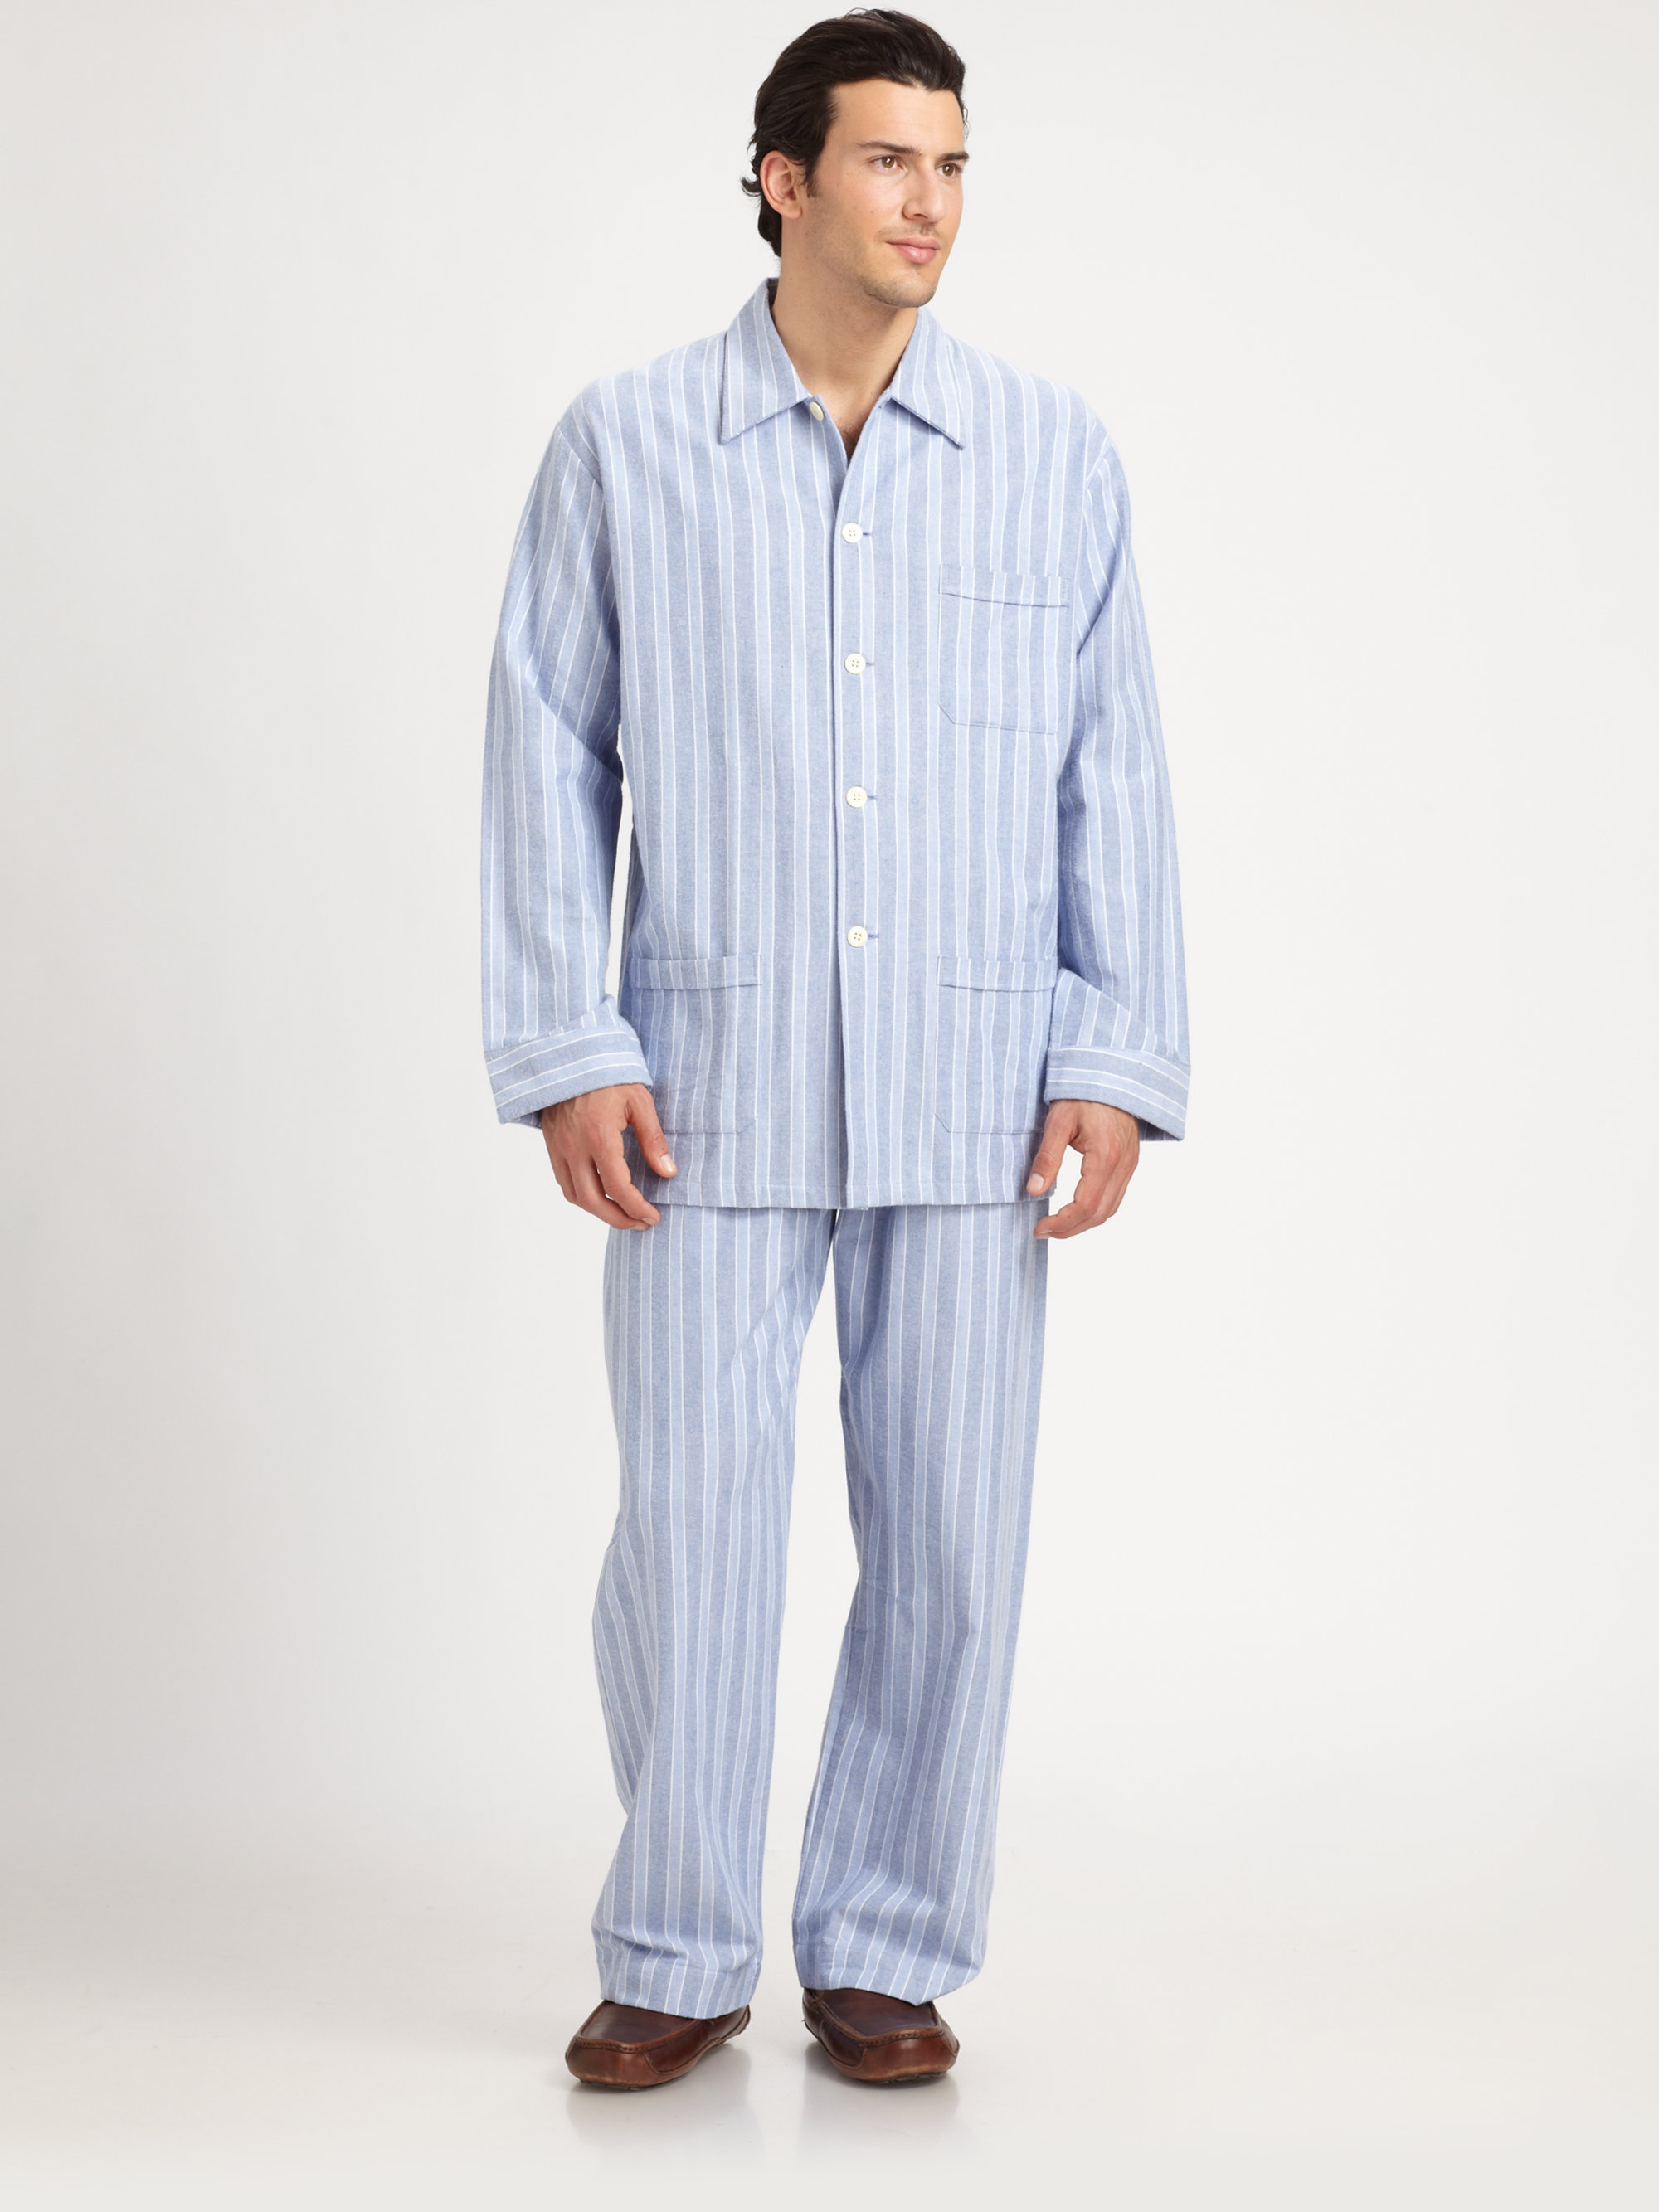 Derek Rose Brushed Cotton Pajama Set in Cloud (Blue) for Men - Lyst2000 x 2667